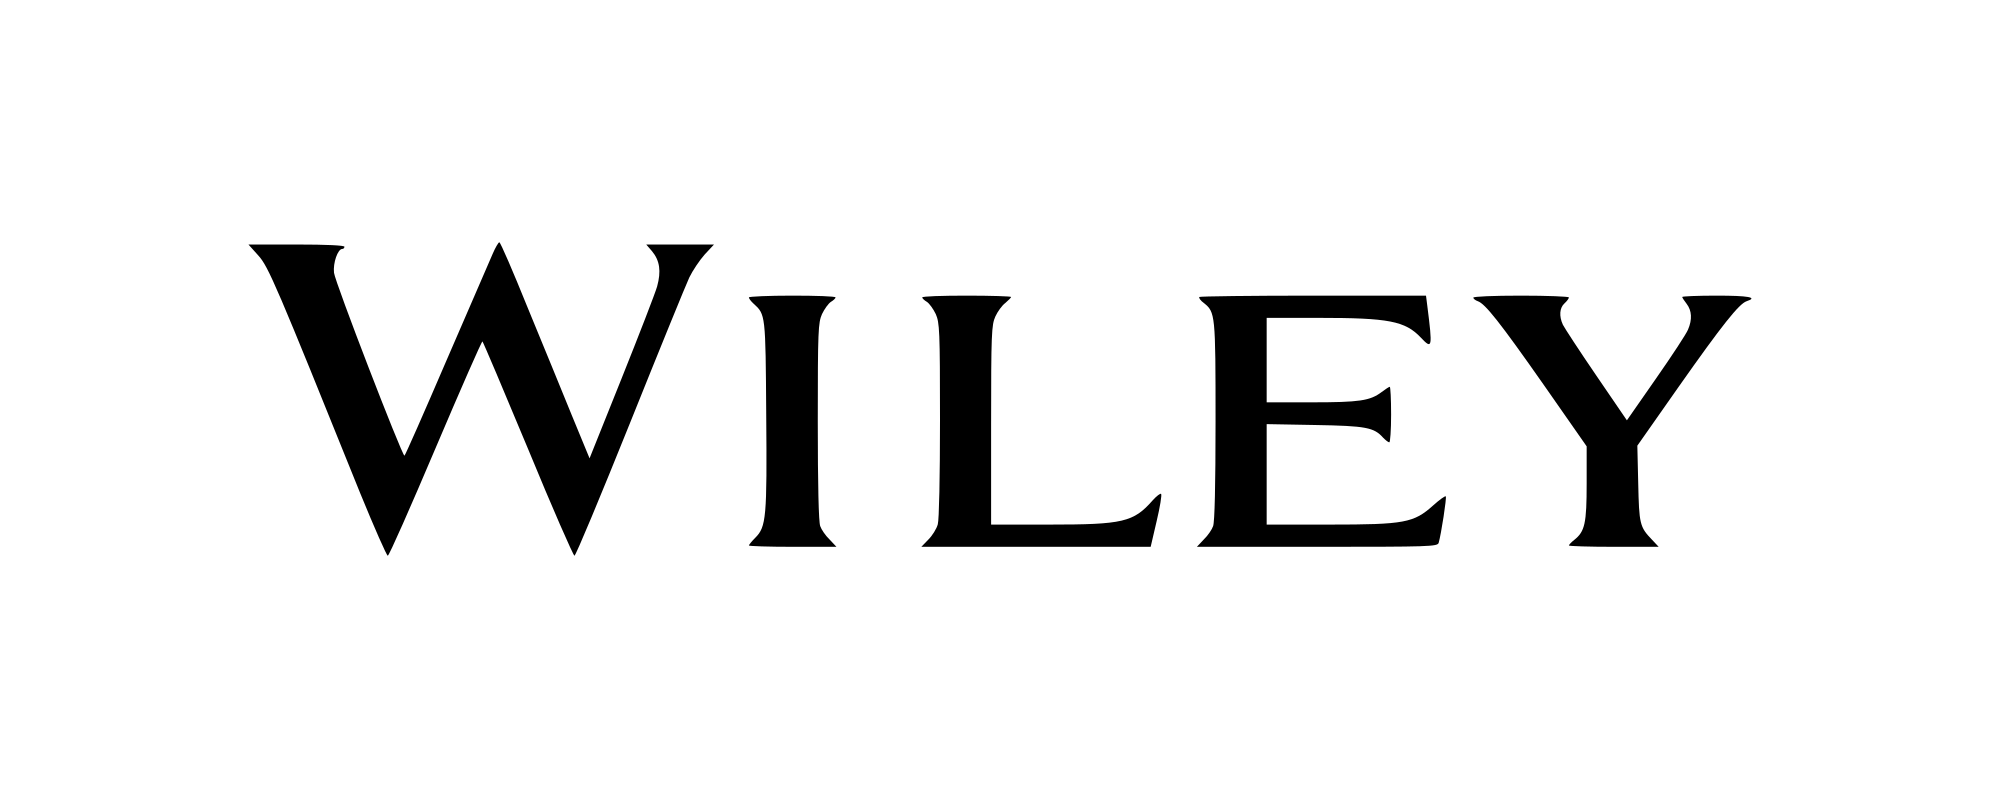 Wiley logo, logotype